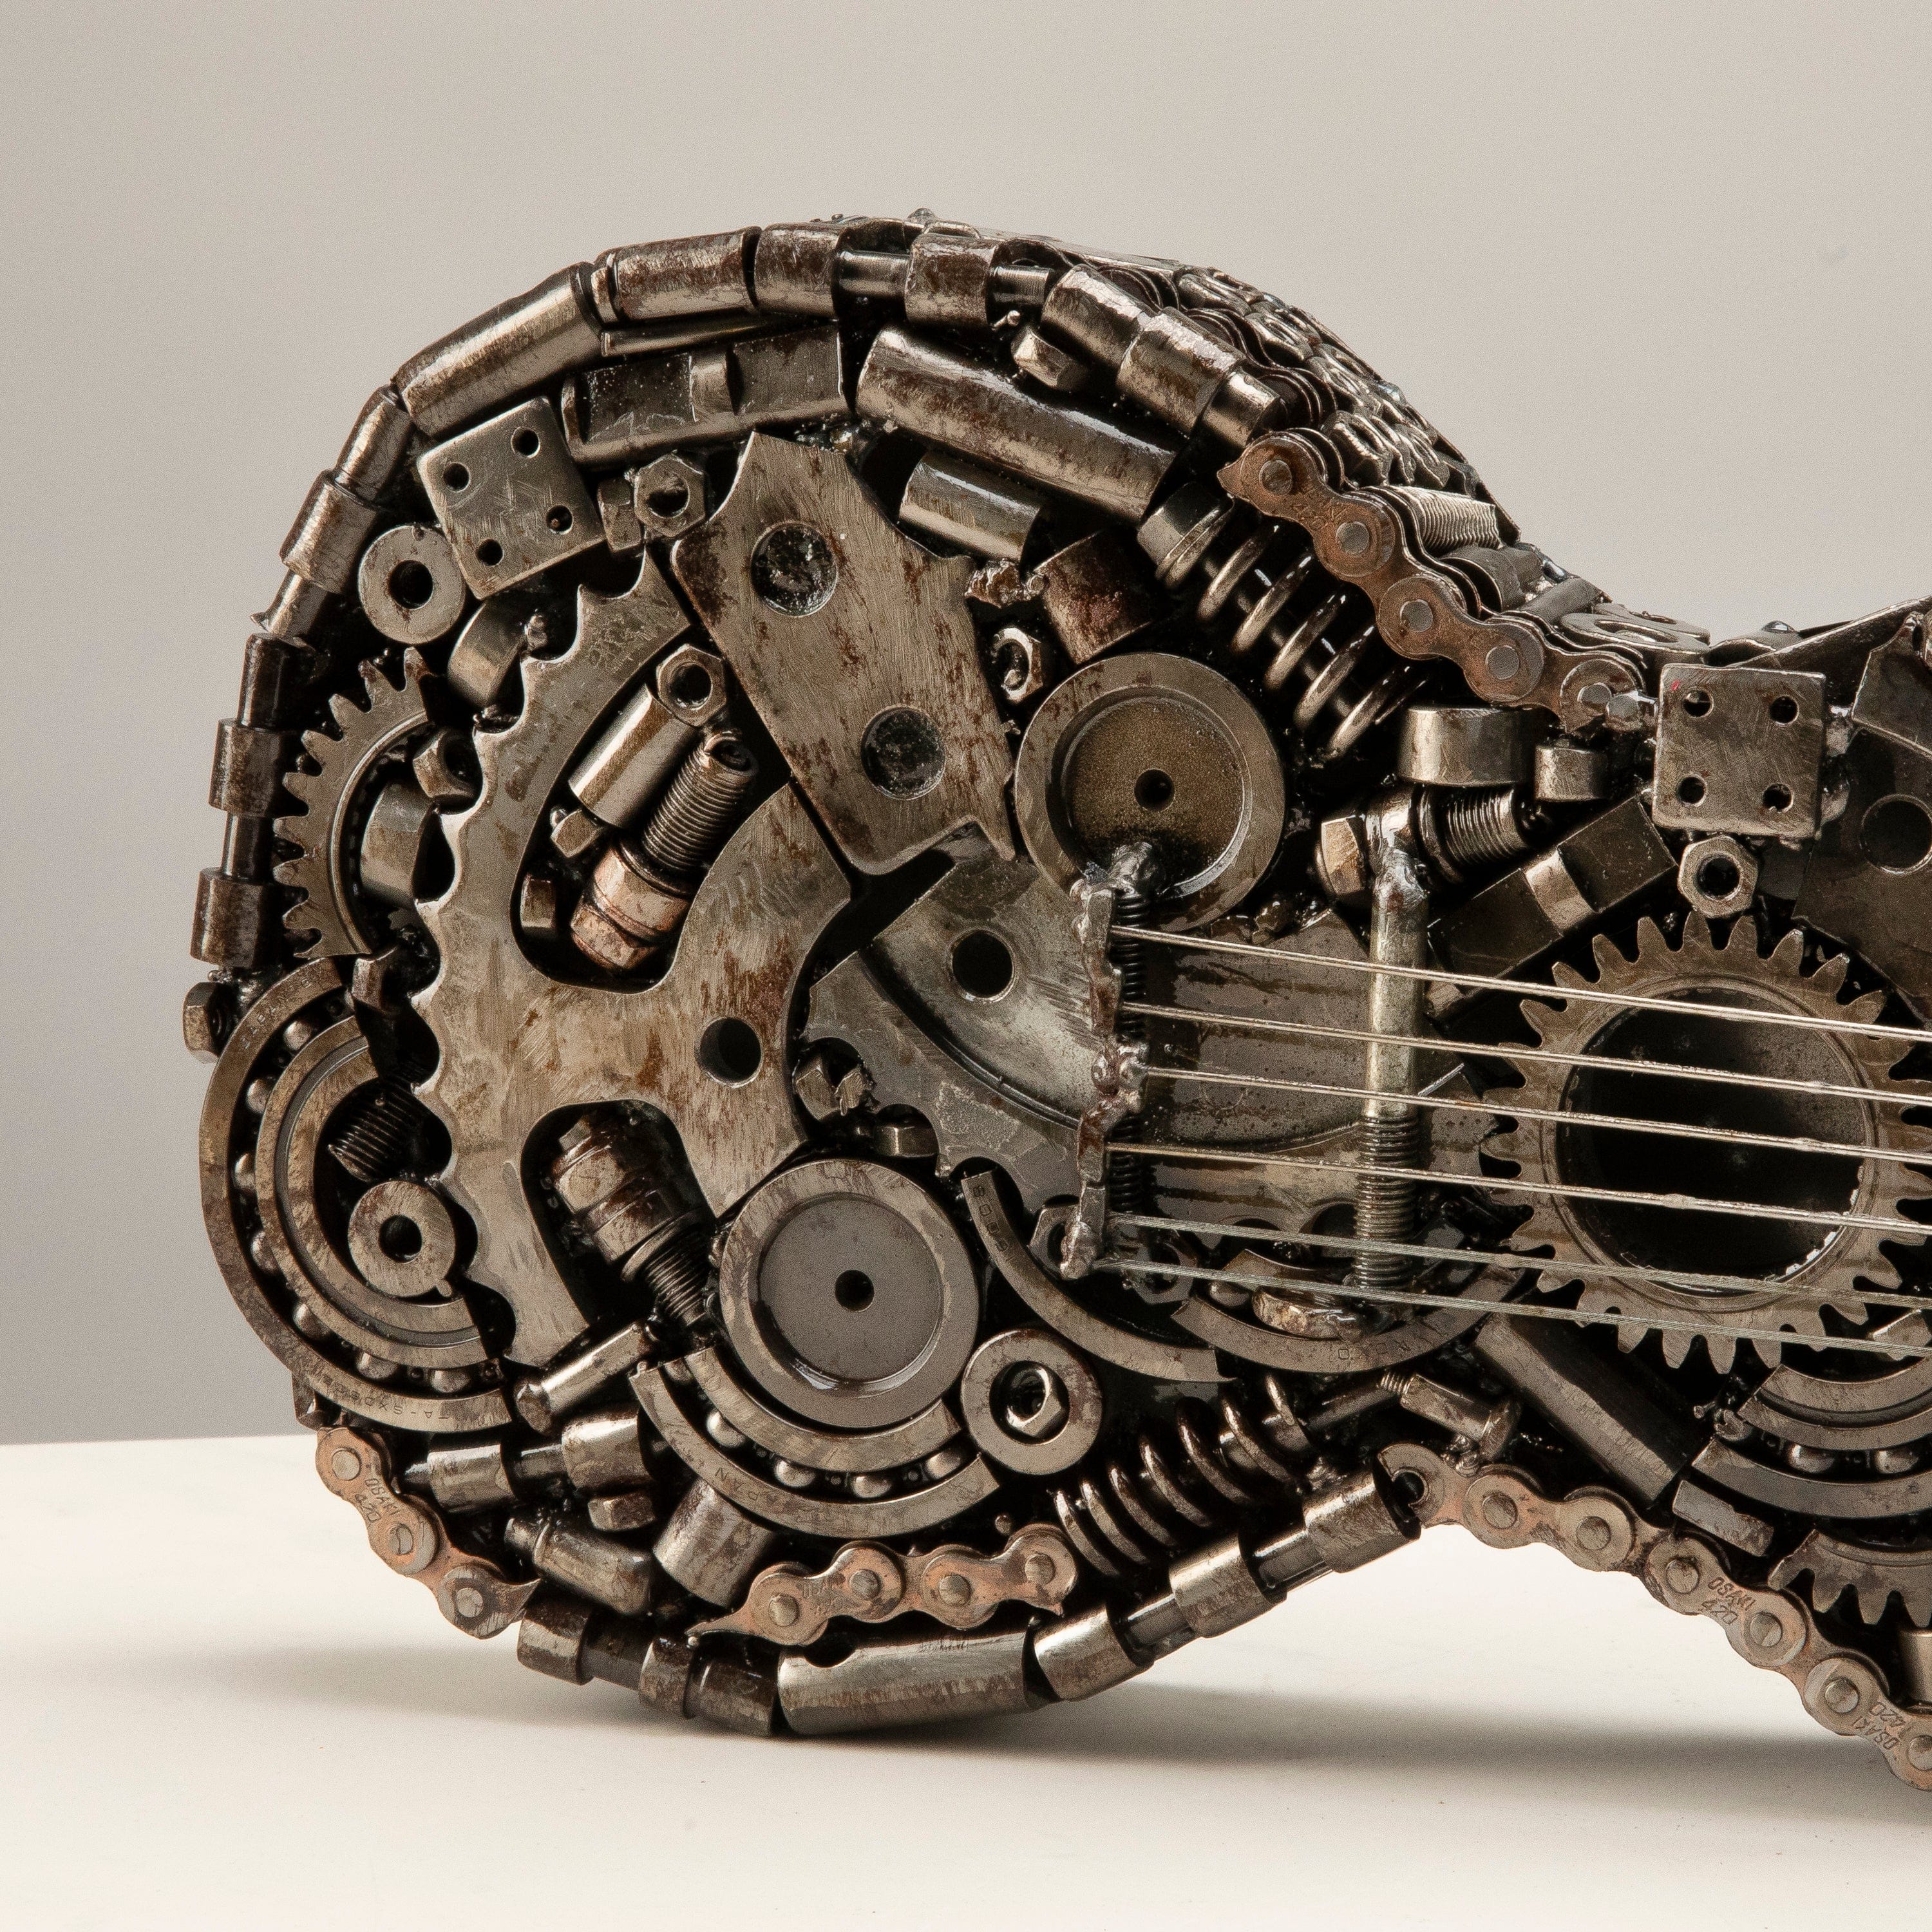 KALIFANO Recycled Metal Art 28" Guitar Inspired Recycled Metal Art Sculpture RMS-GT70-PK